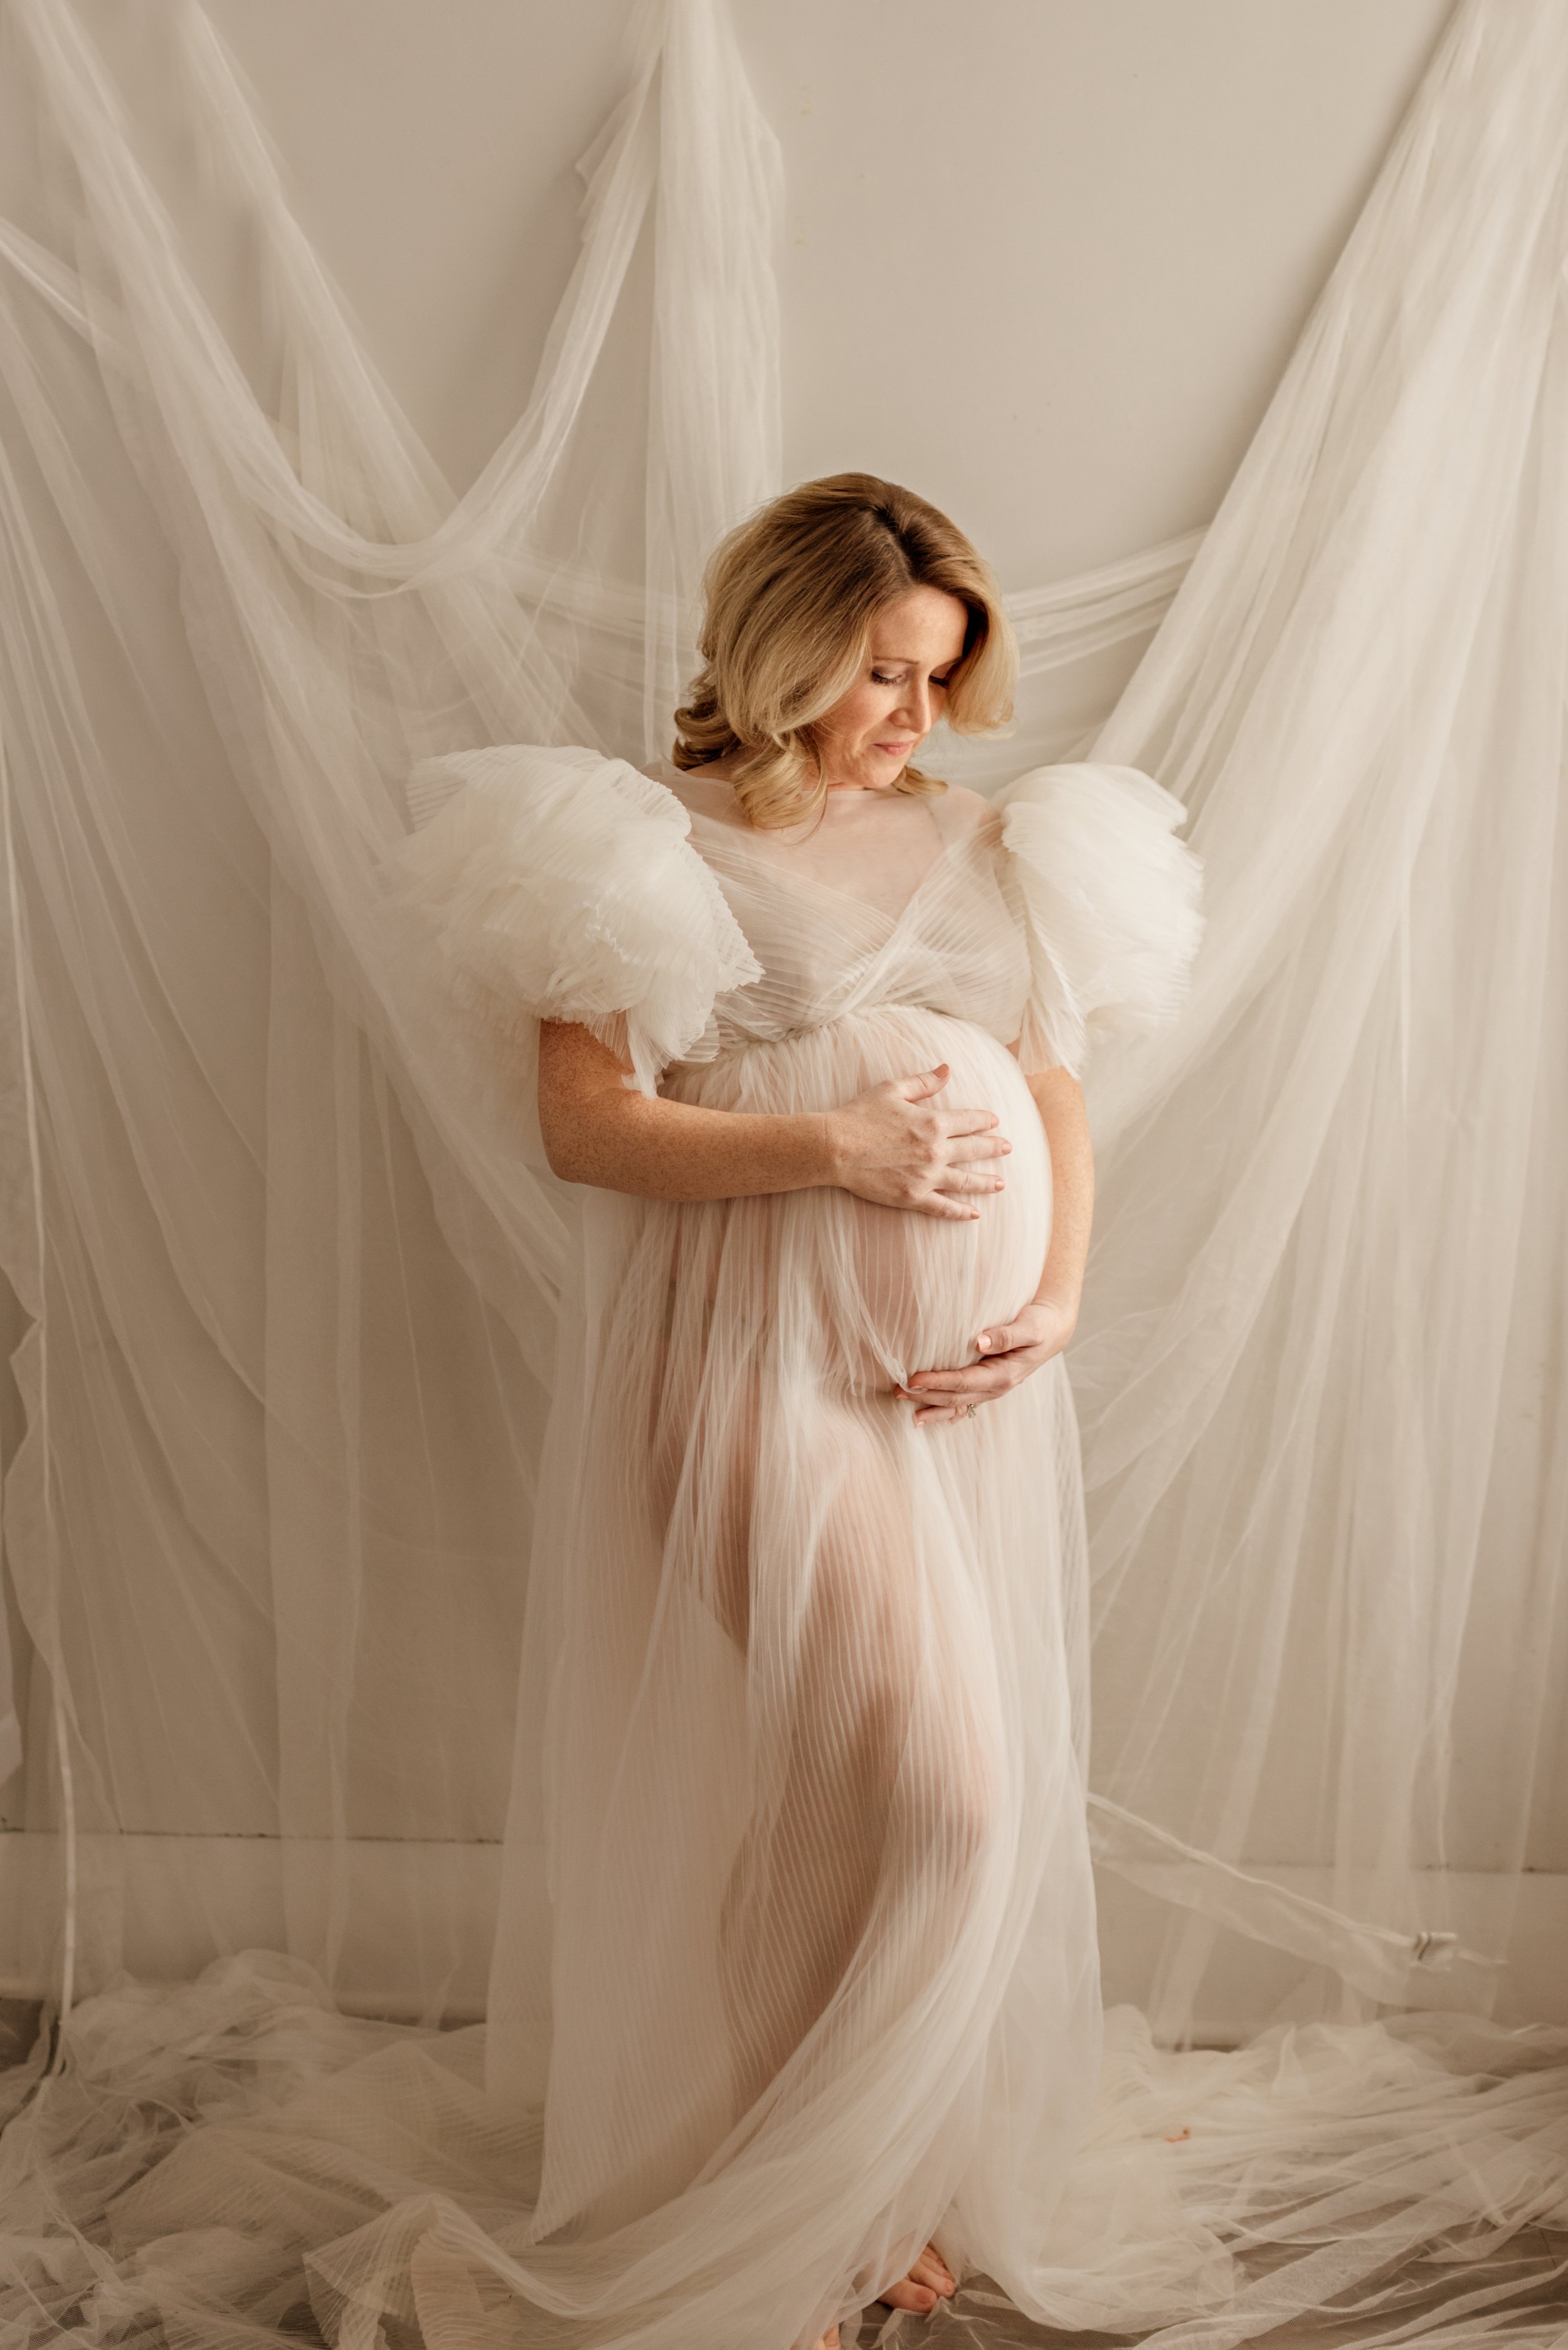 cleveland-ohio-maternity-studio-photographer-lauren-grayson-6.jpg